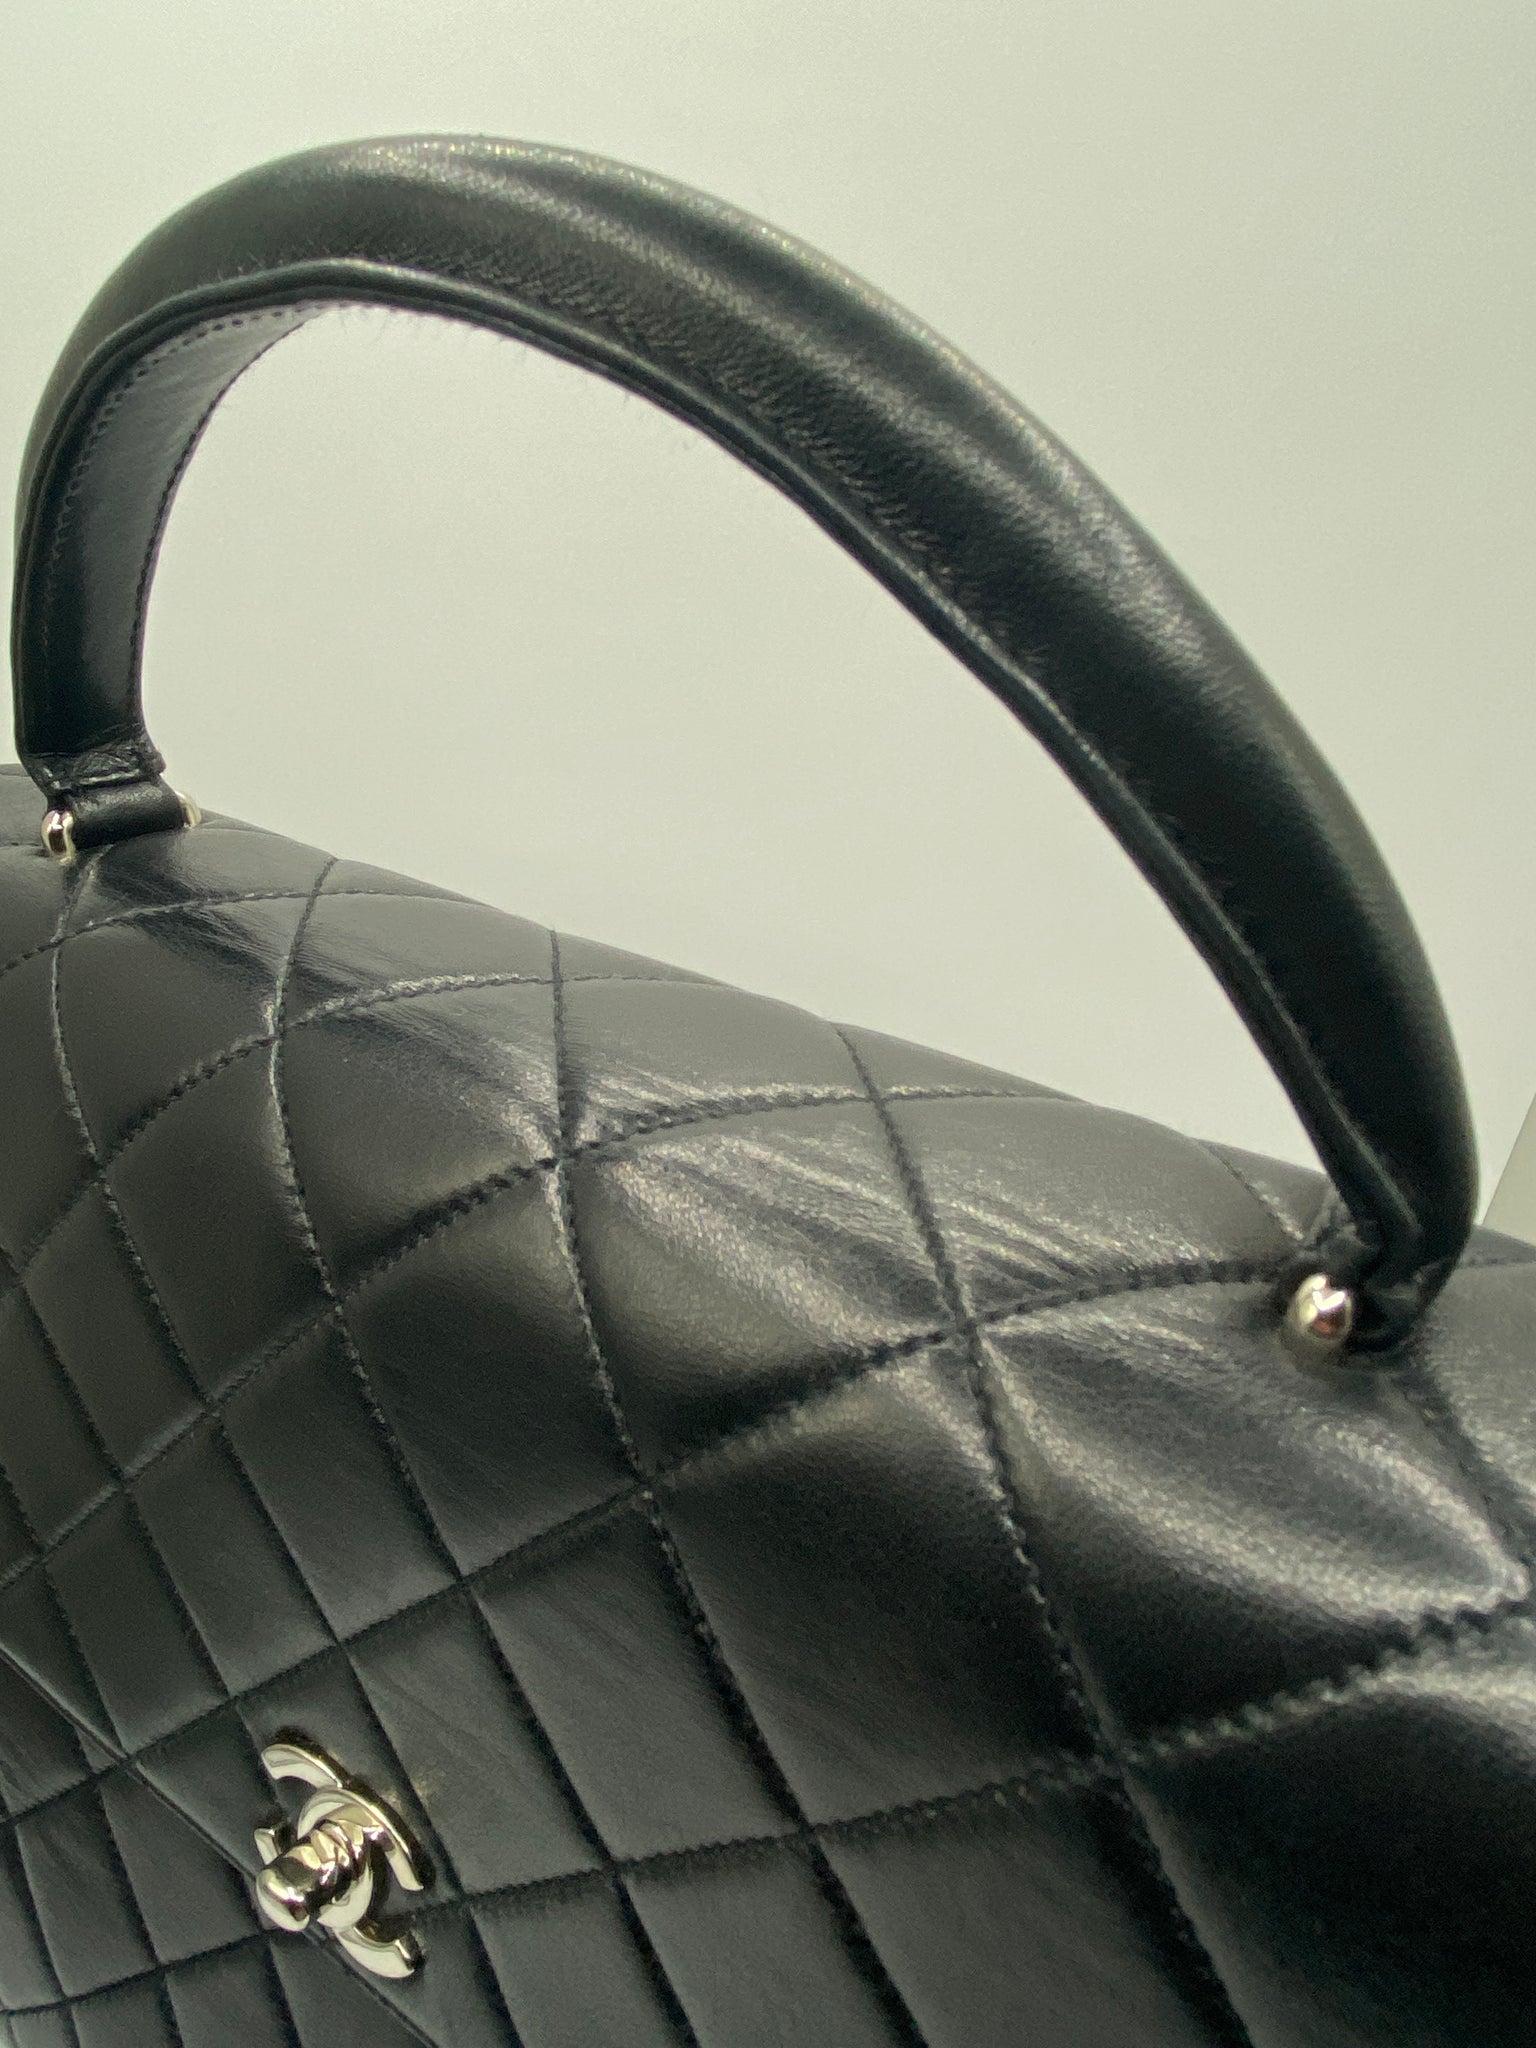 CC Vintage Chanel Jumbo Classic Flap Bag